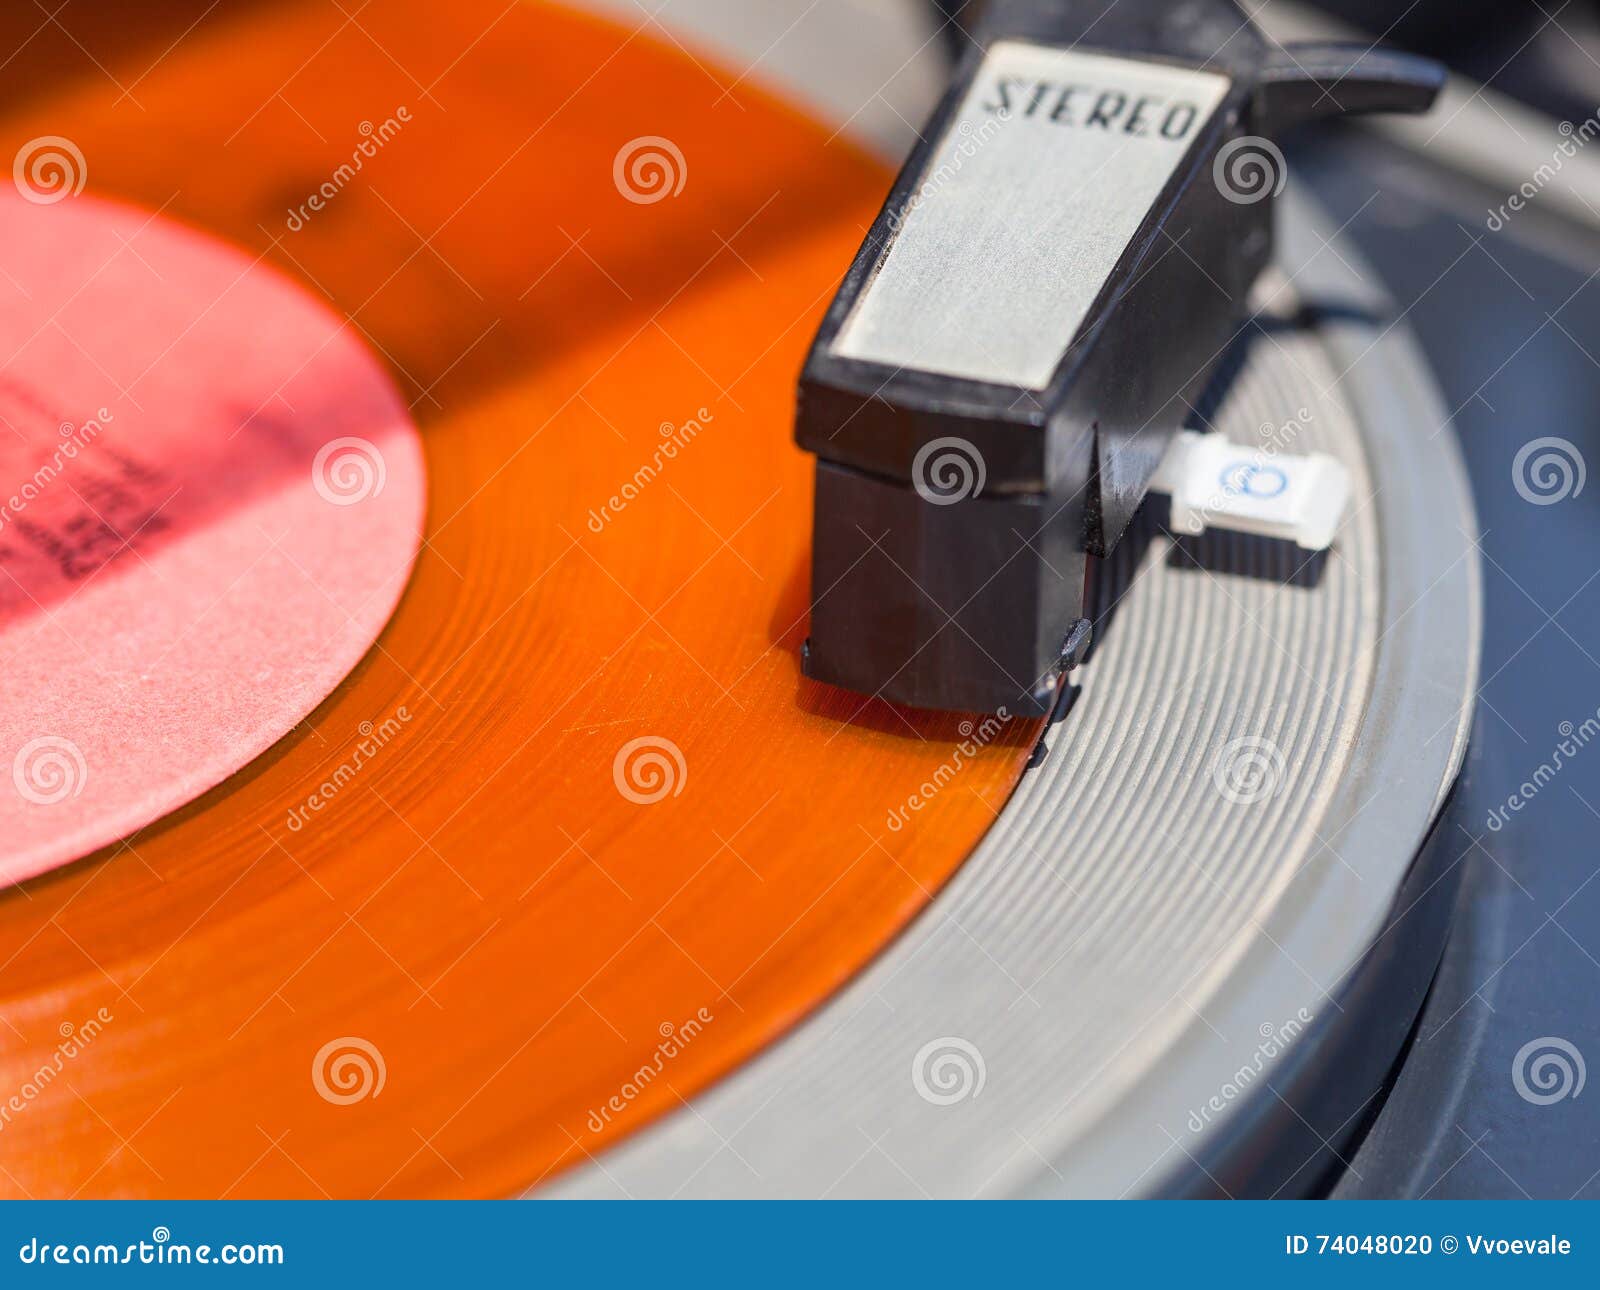 tonearm of record-player on orange vinyl disc